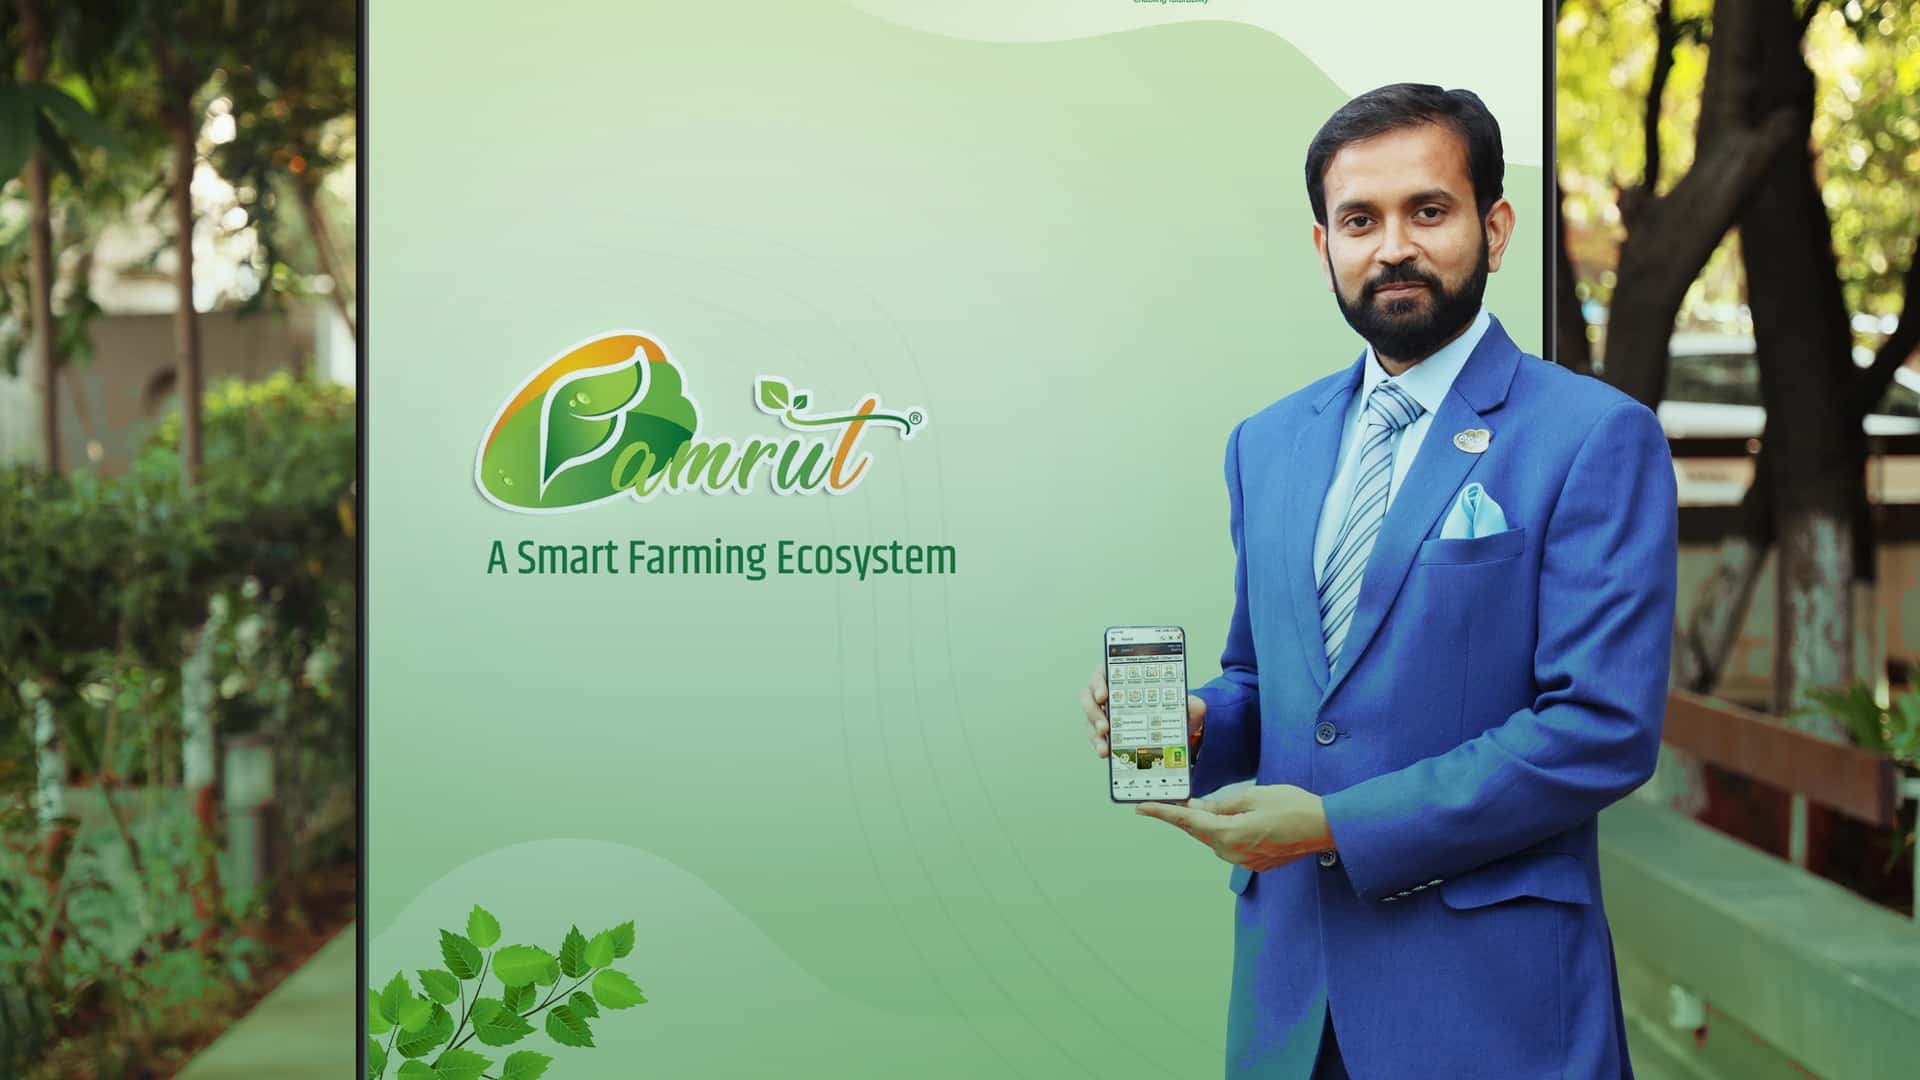 ESDS Launches its digital Agro platform - 'Famrut'